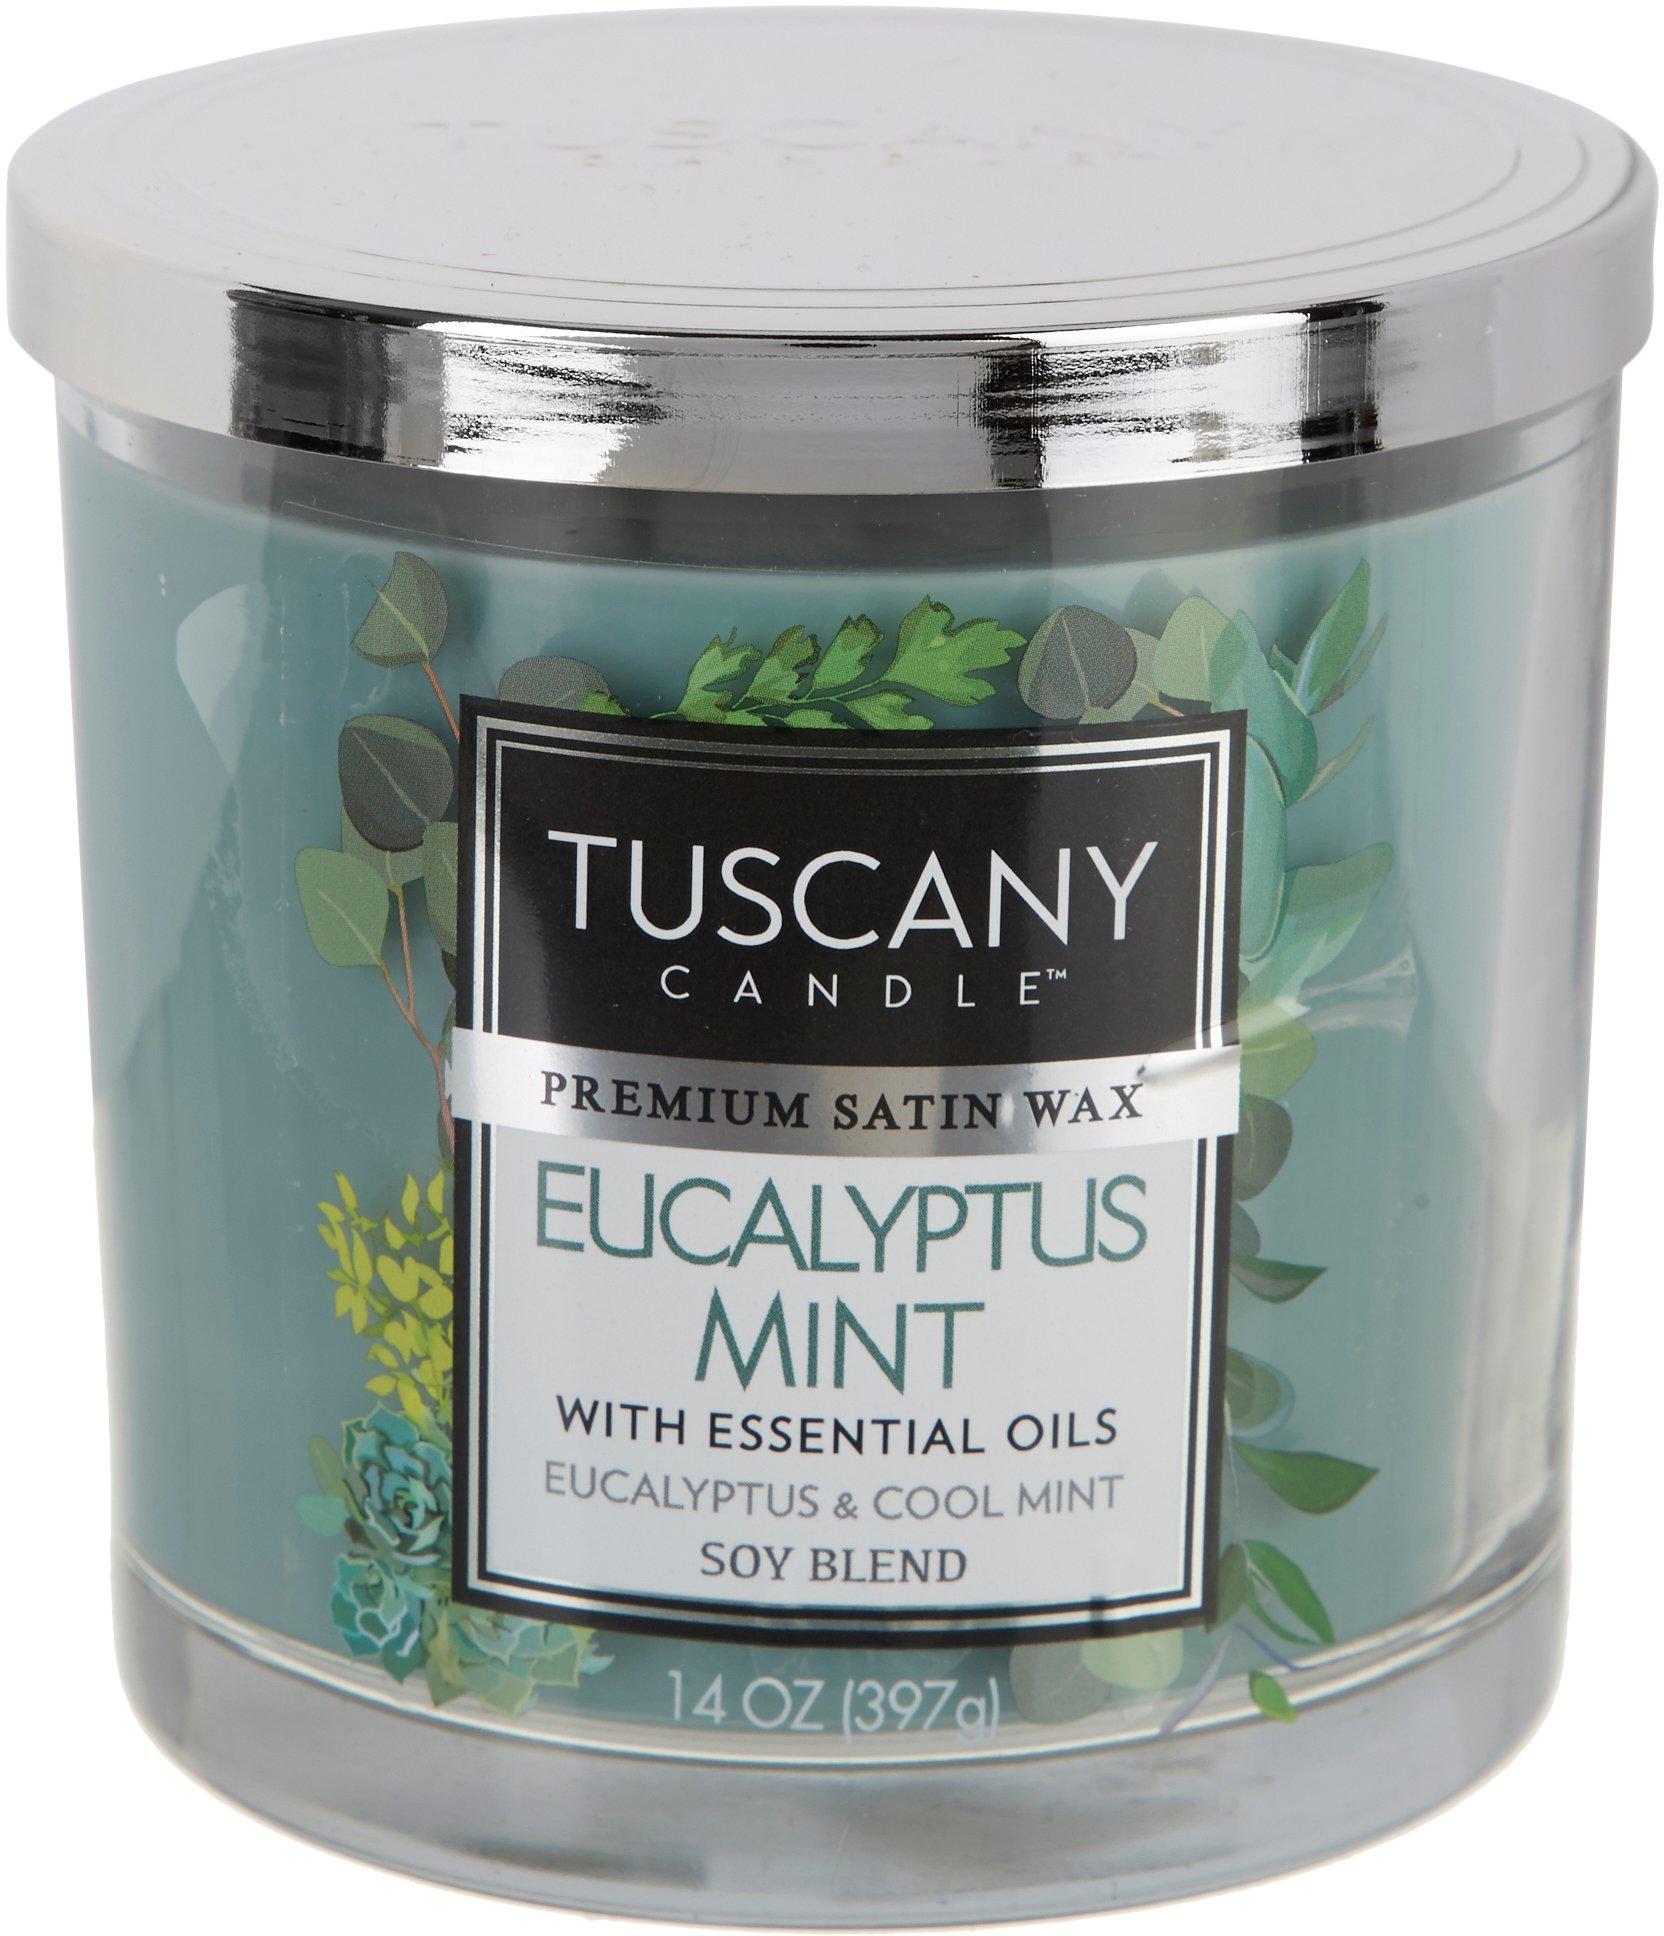 Tuscany 14 oz. Eucalyptus Mint Soy Blend Jar Candle